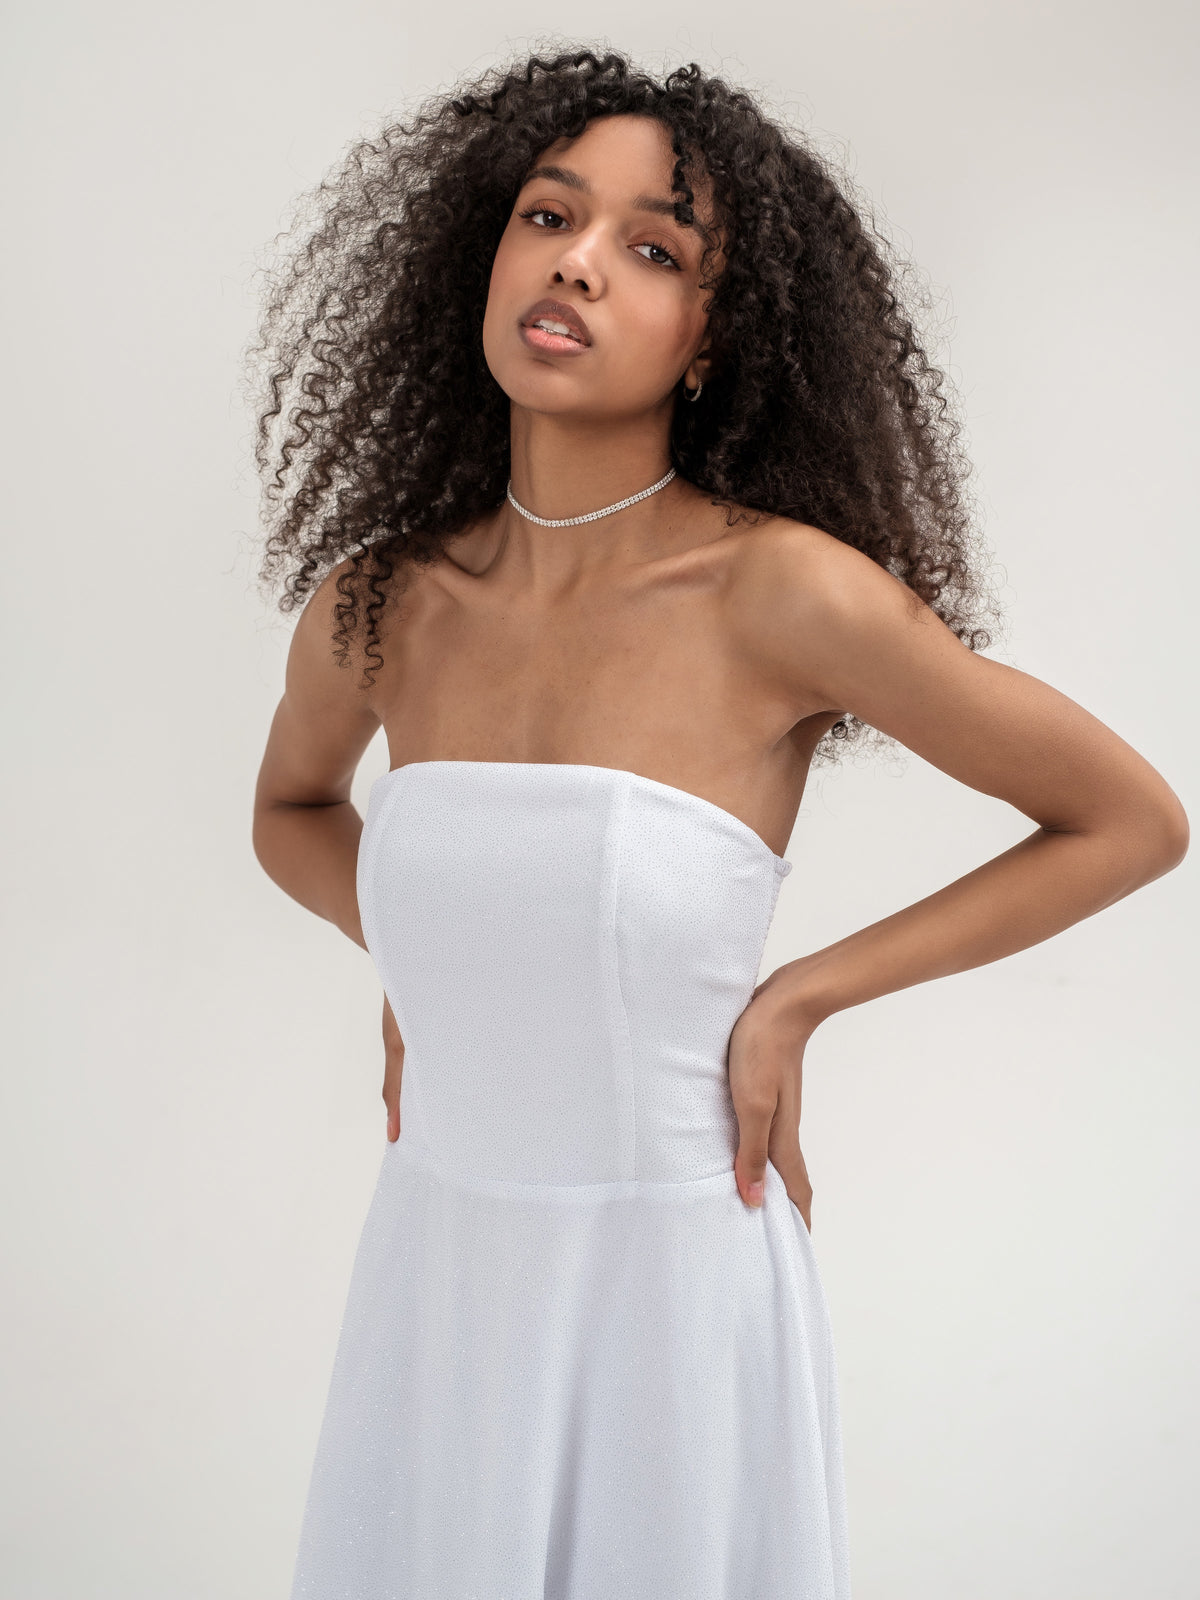 White short corset dress with glitter